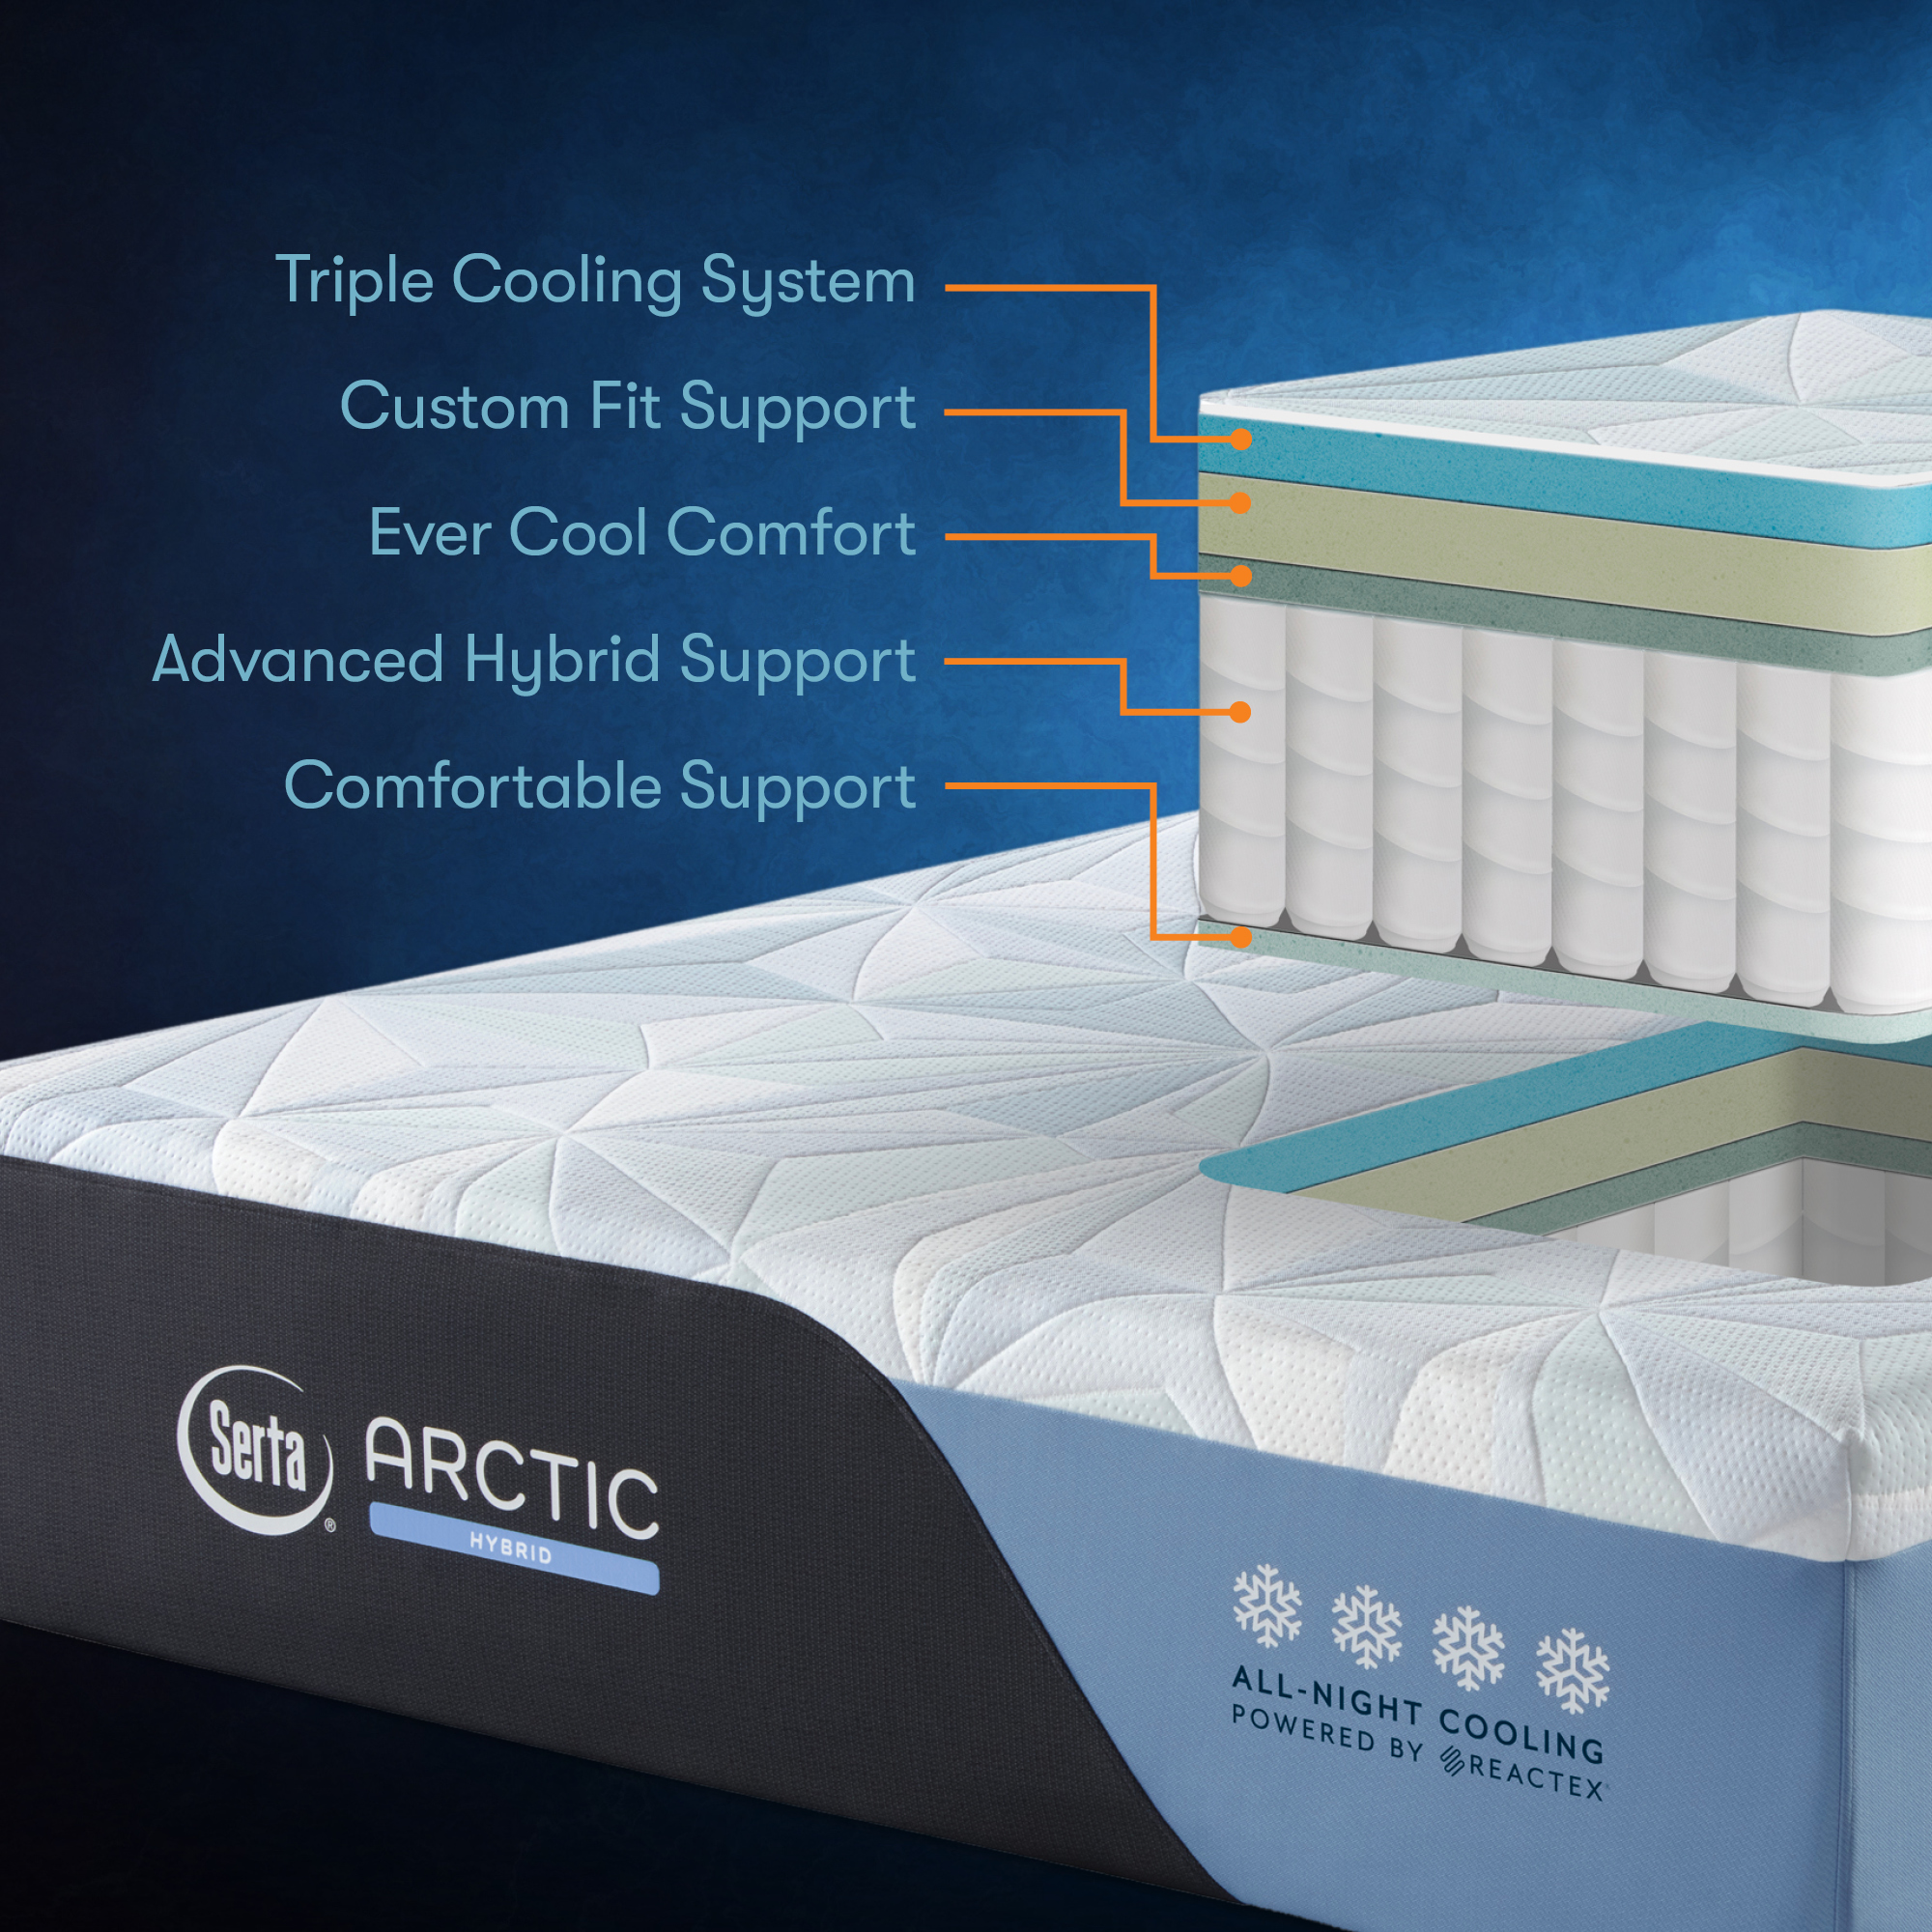 Serta Arctic 13.5" Medium Hybrid Cooling Regular Profile Mattress, Multiple Sizes - image 3 of 15